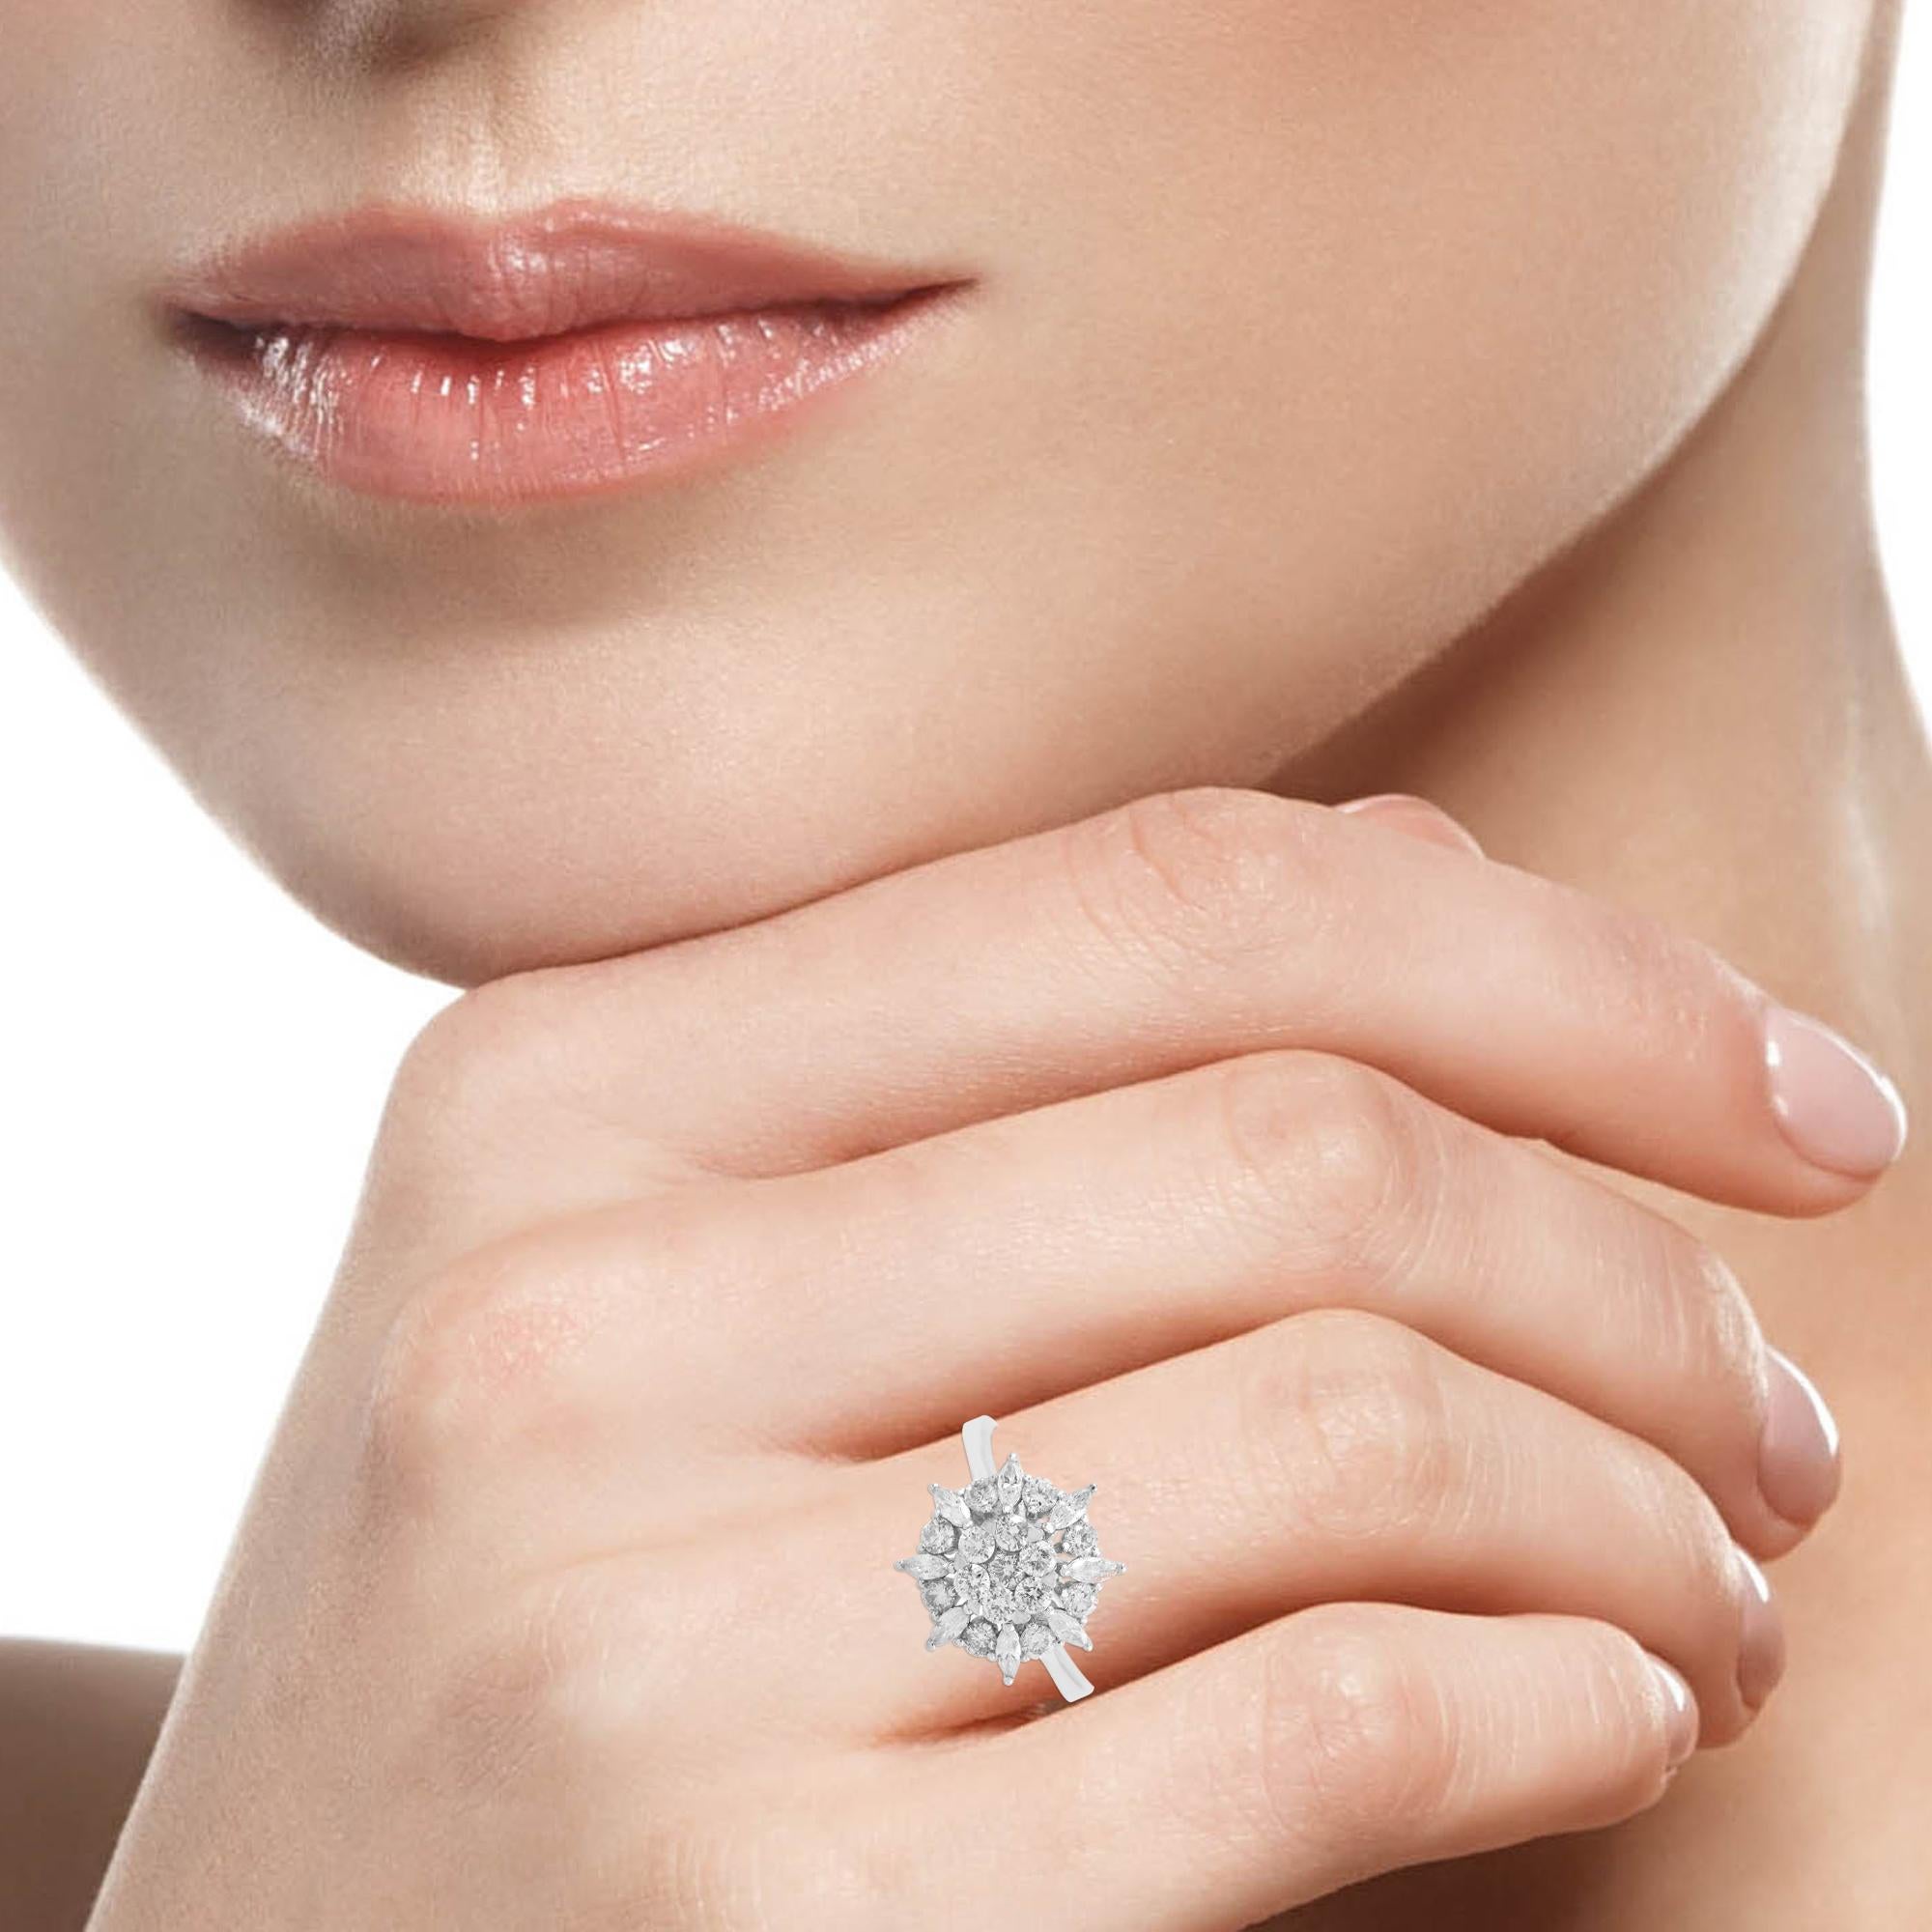 1.2 carat marquise diamond ring